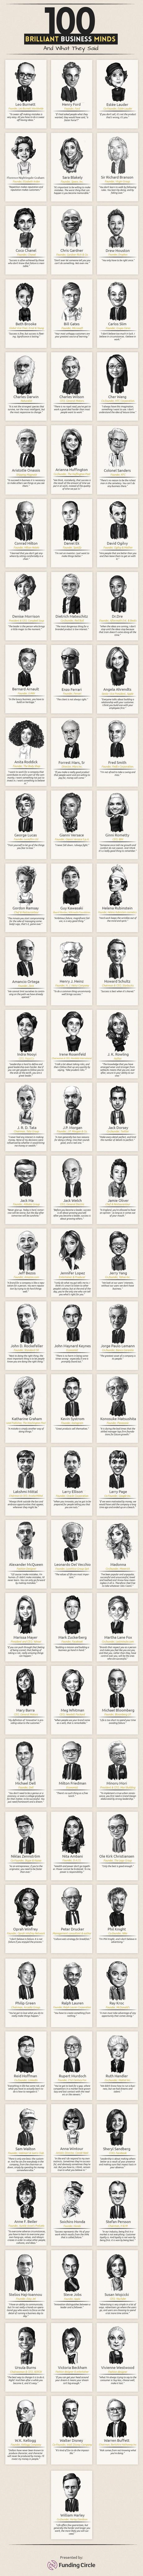 100 berühmte Zitate [#Infografik]